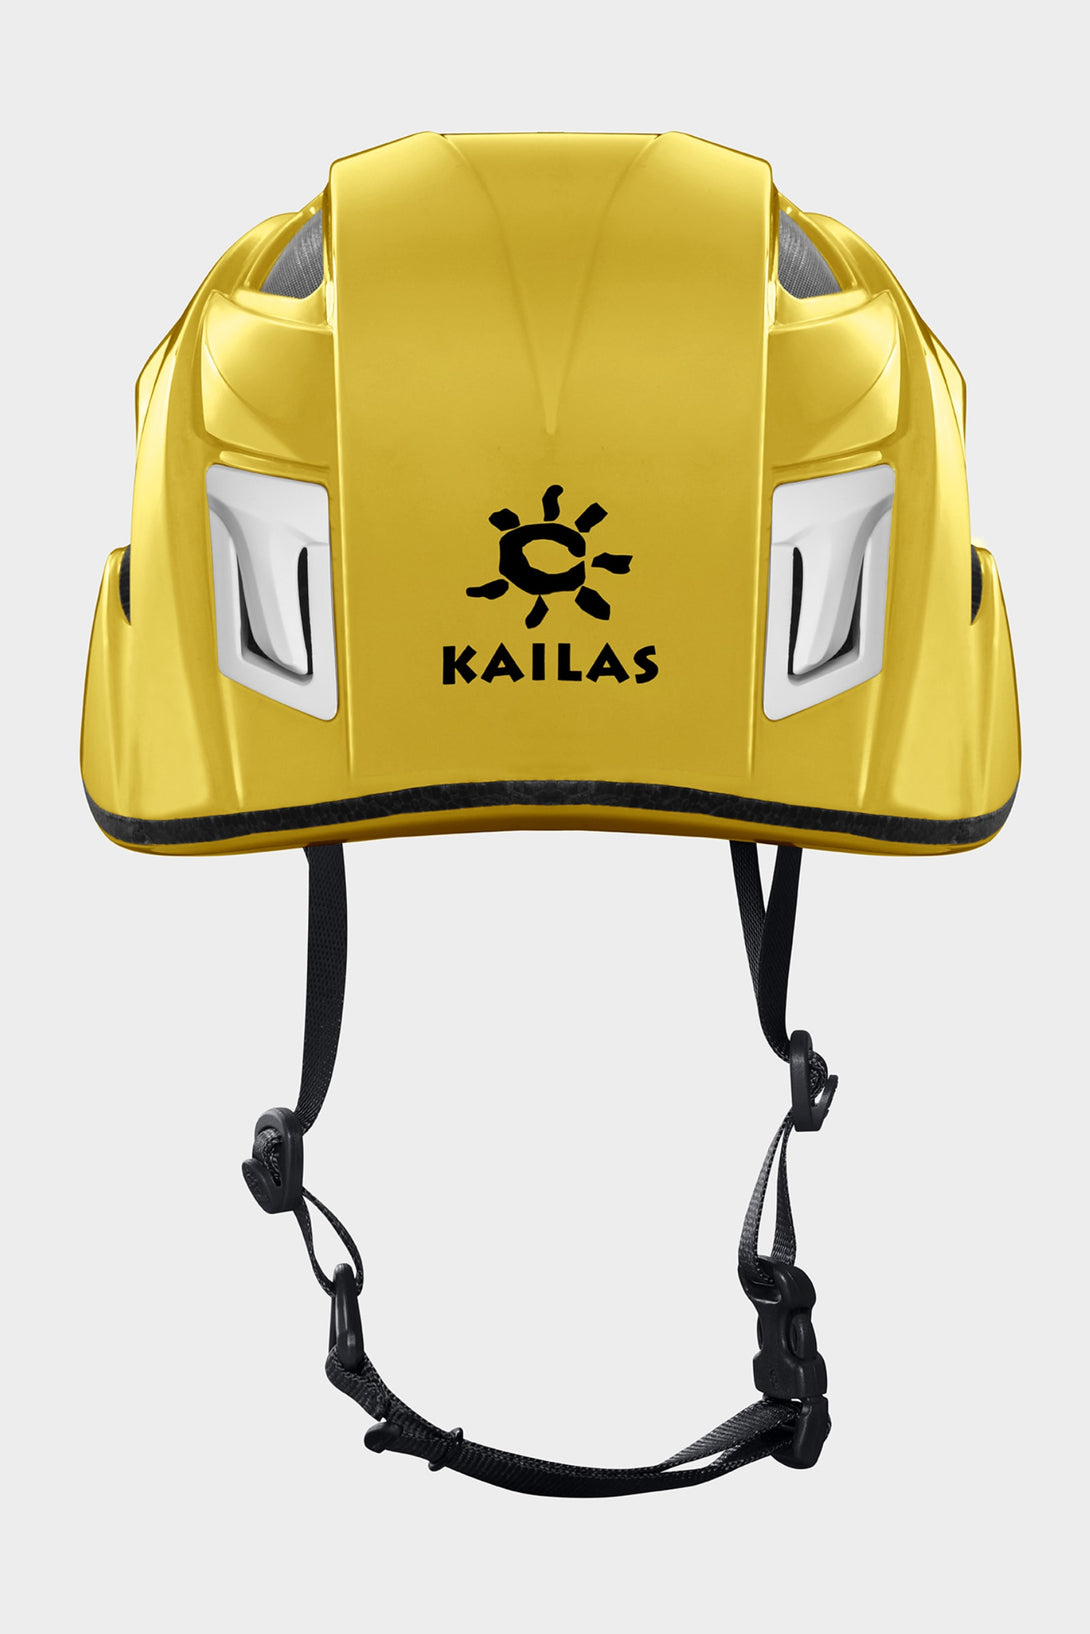 Kailas Ultralight Selma II Climbing Helmet Men Hiking Climbing Caving Helmet Adjustable